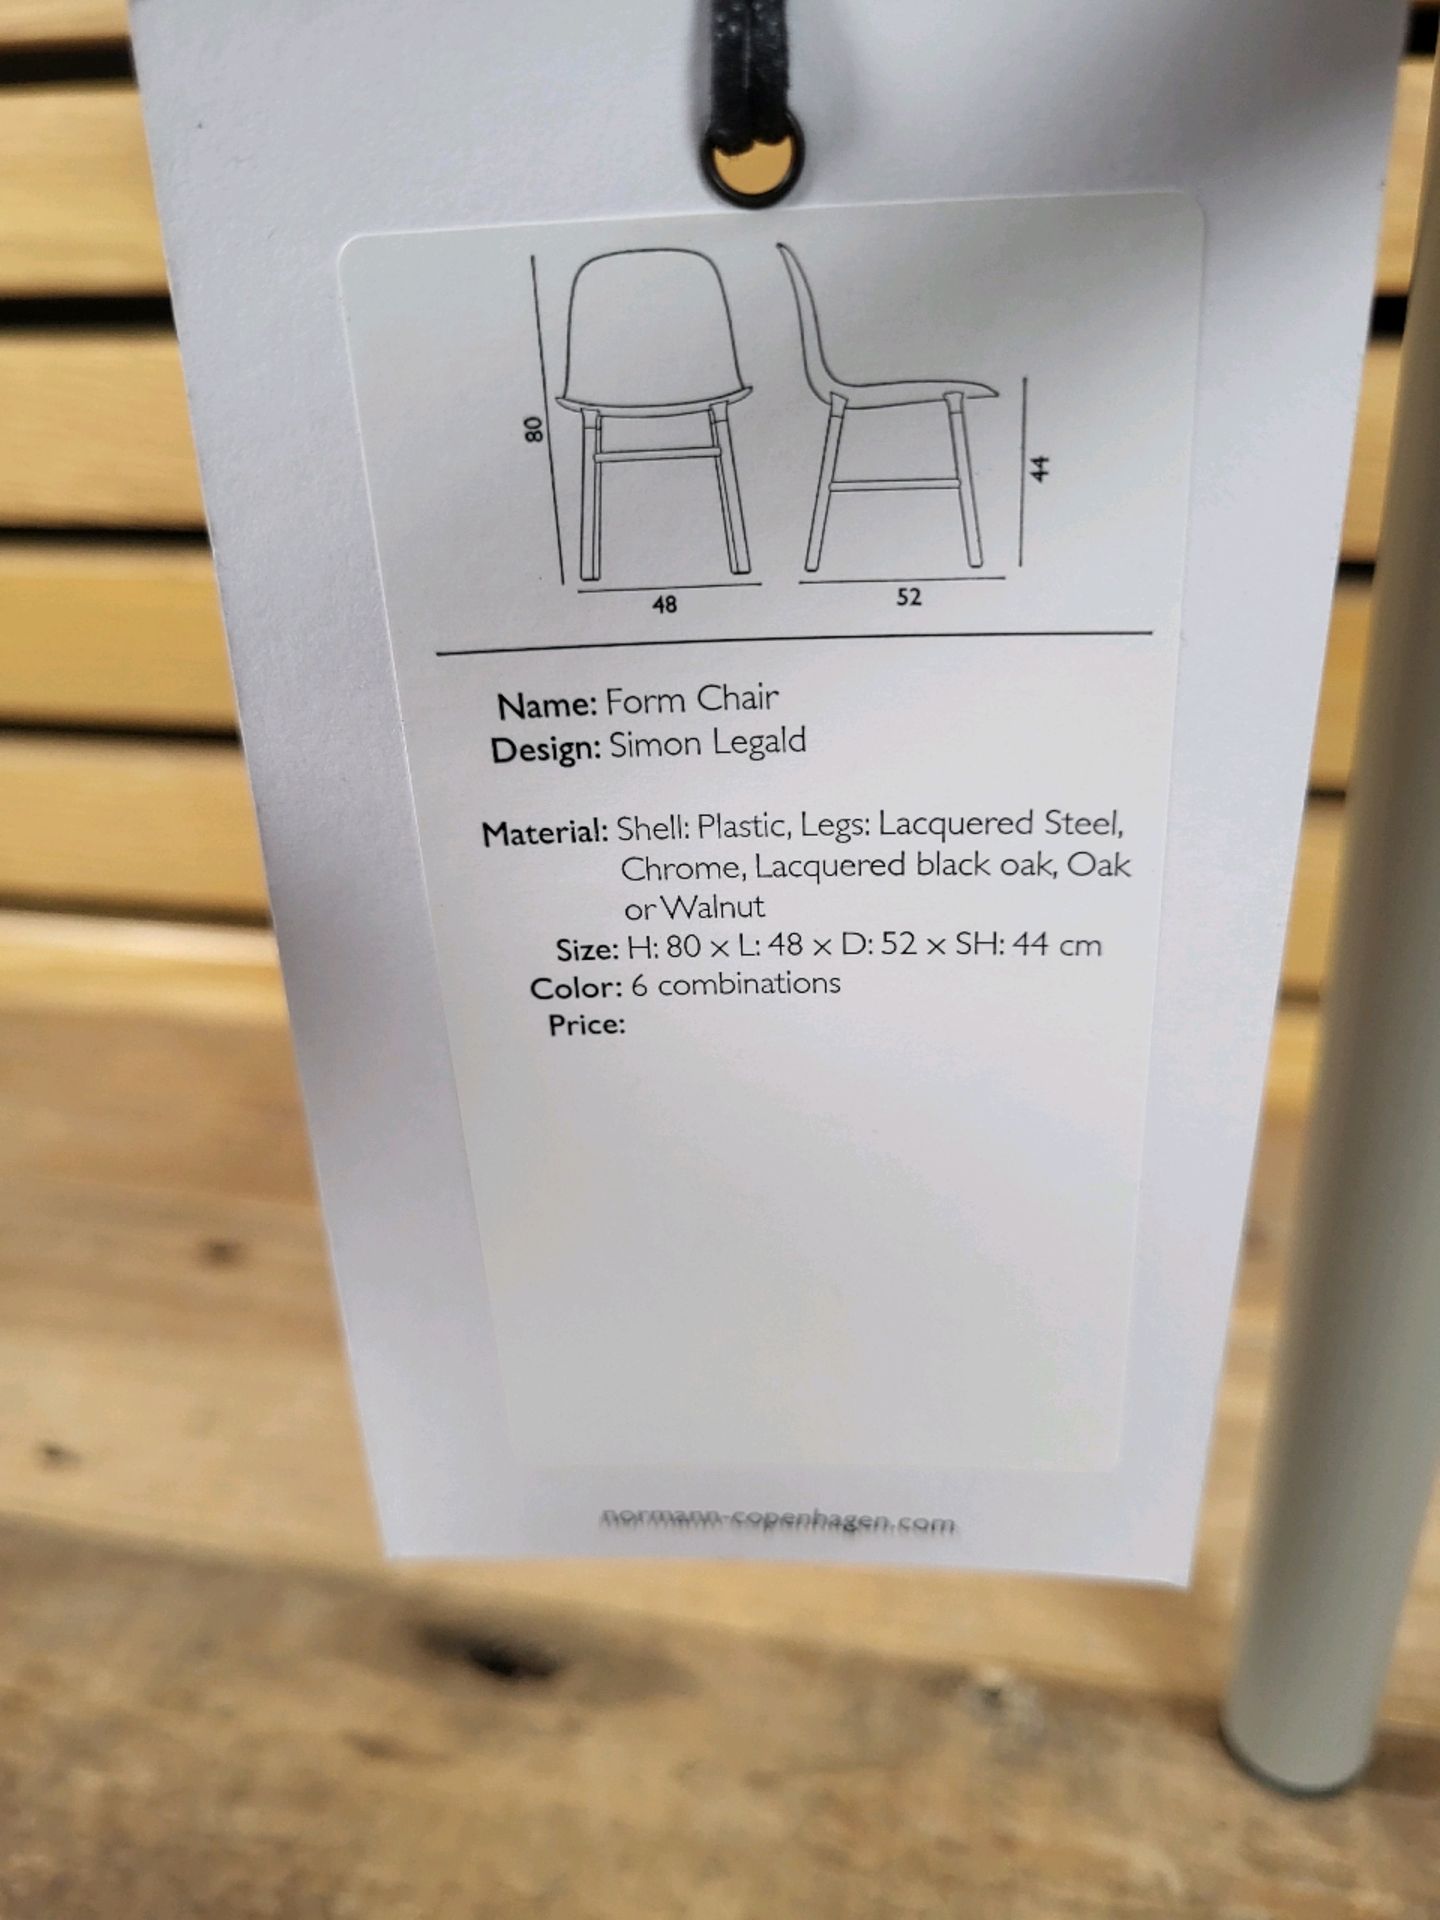 Normann Copenhagen Form Chair In Grey - Image 3 of 4